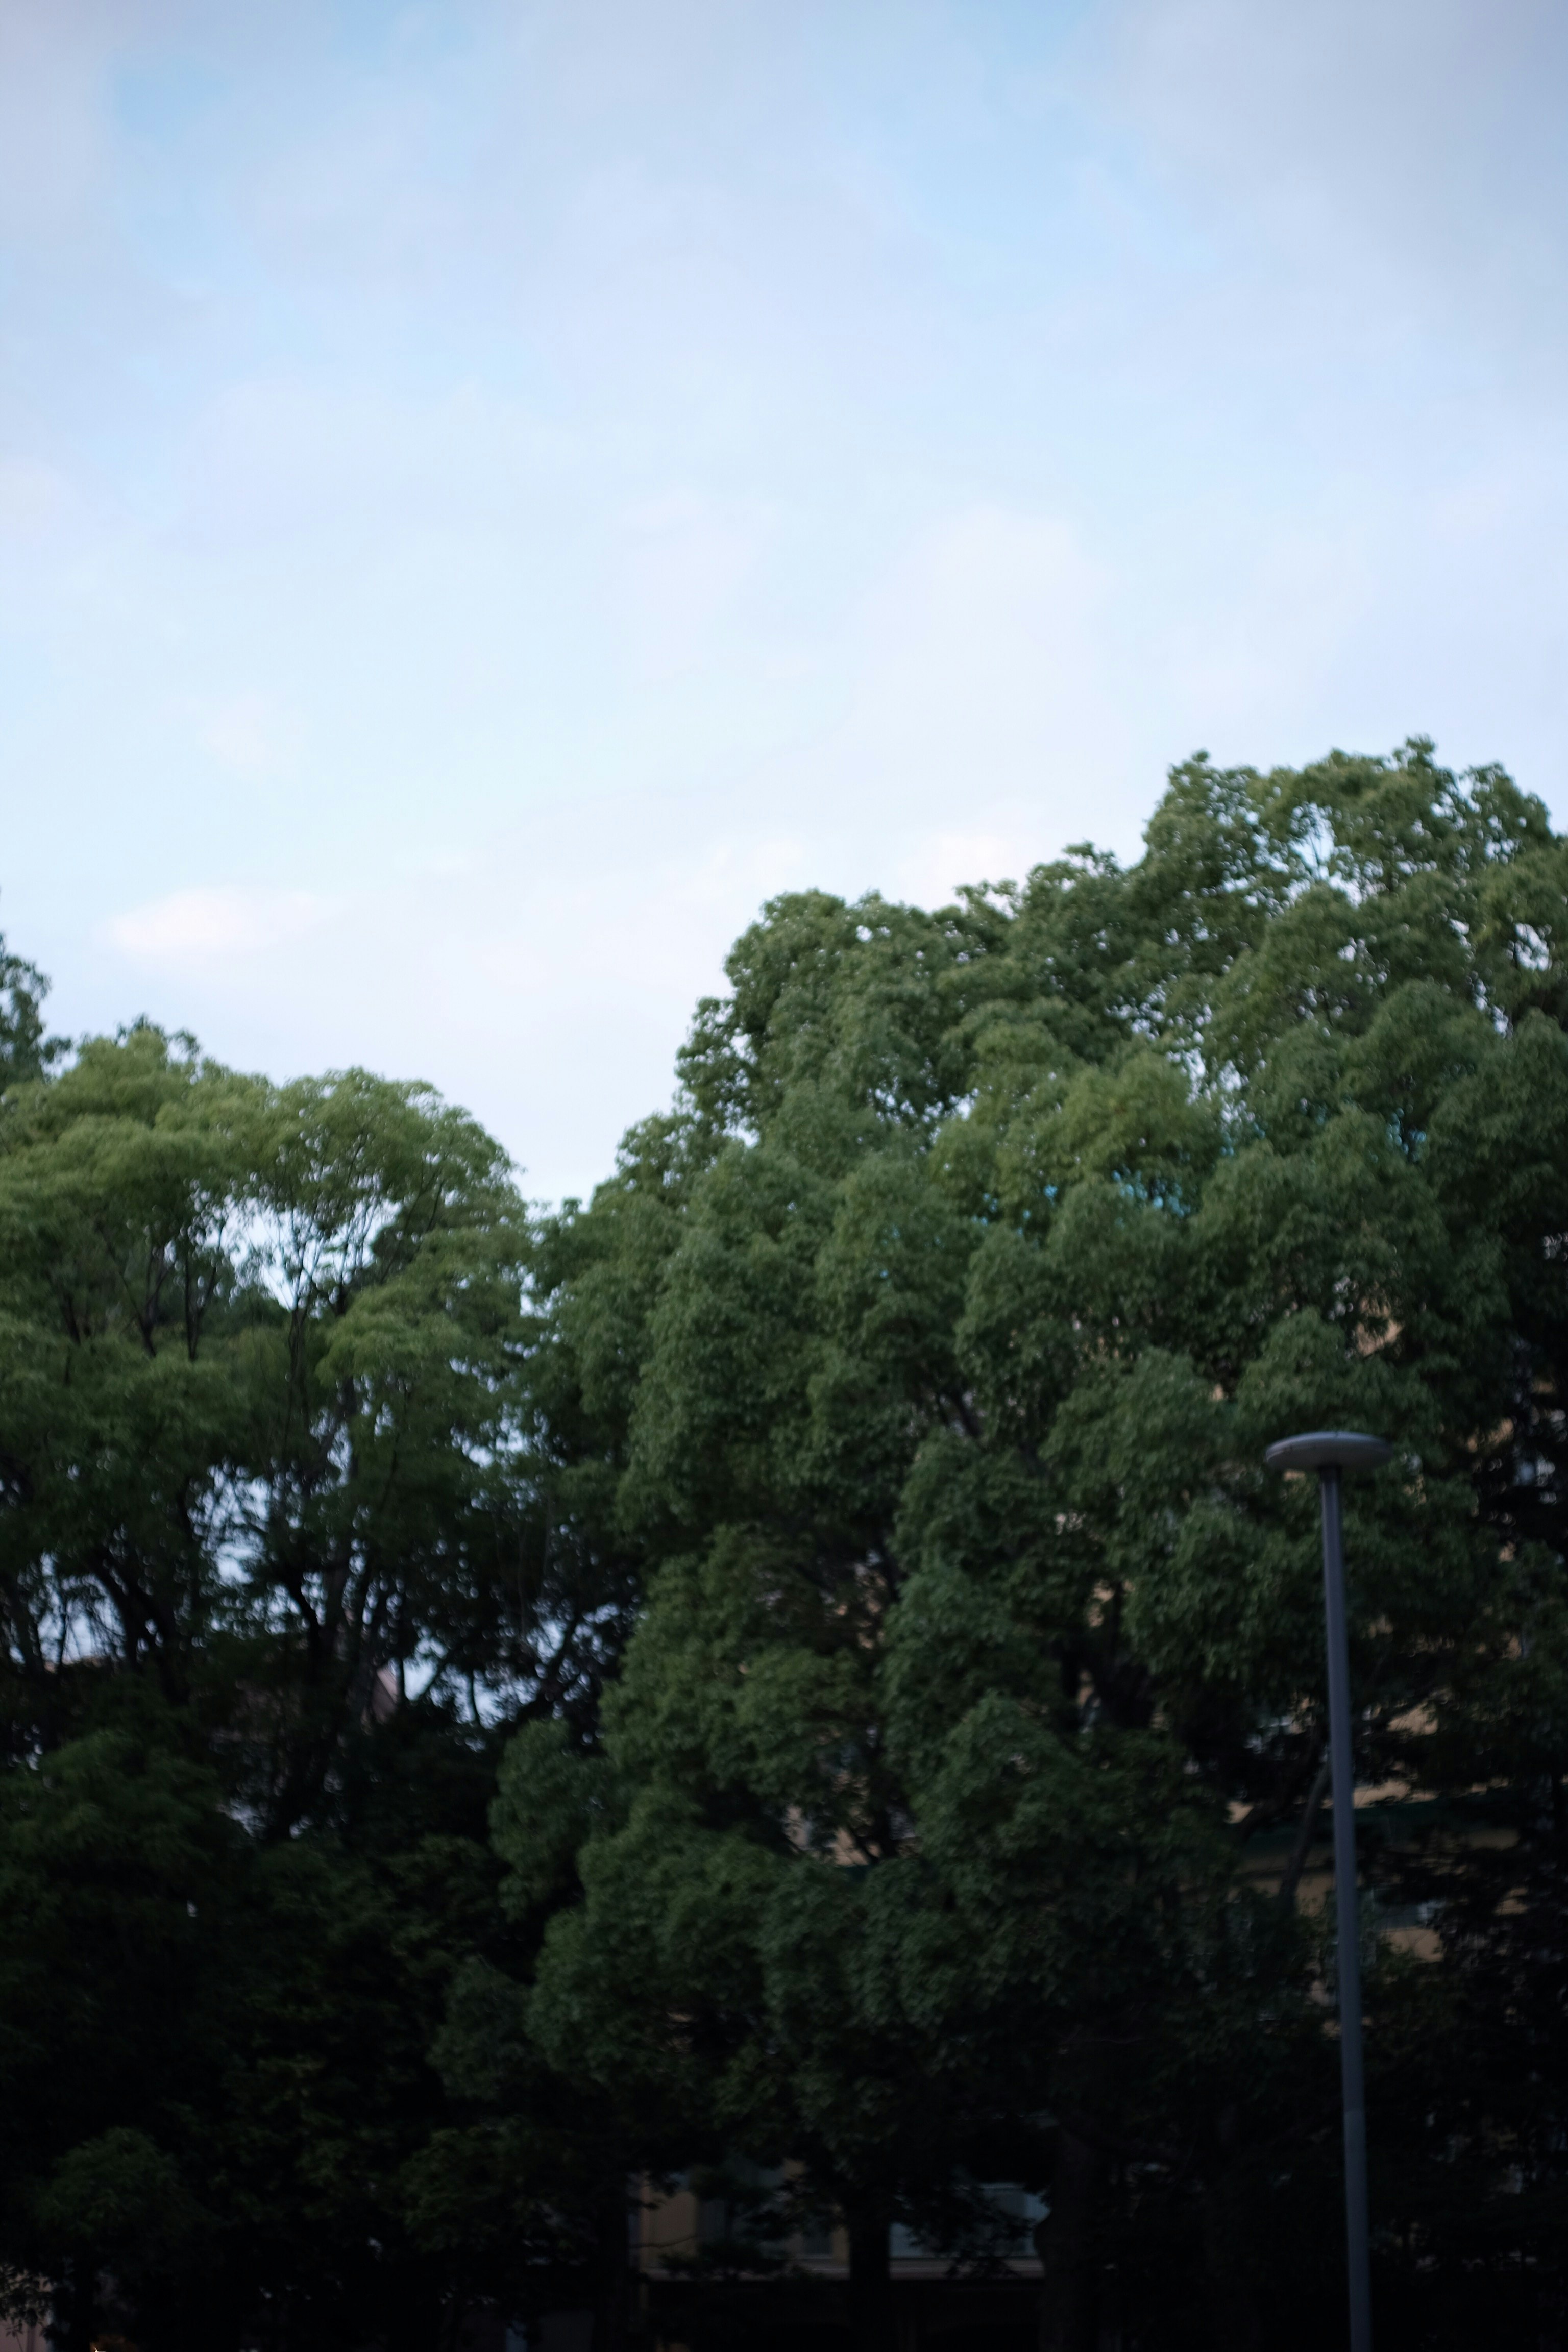 green trees under white sky during daytime